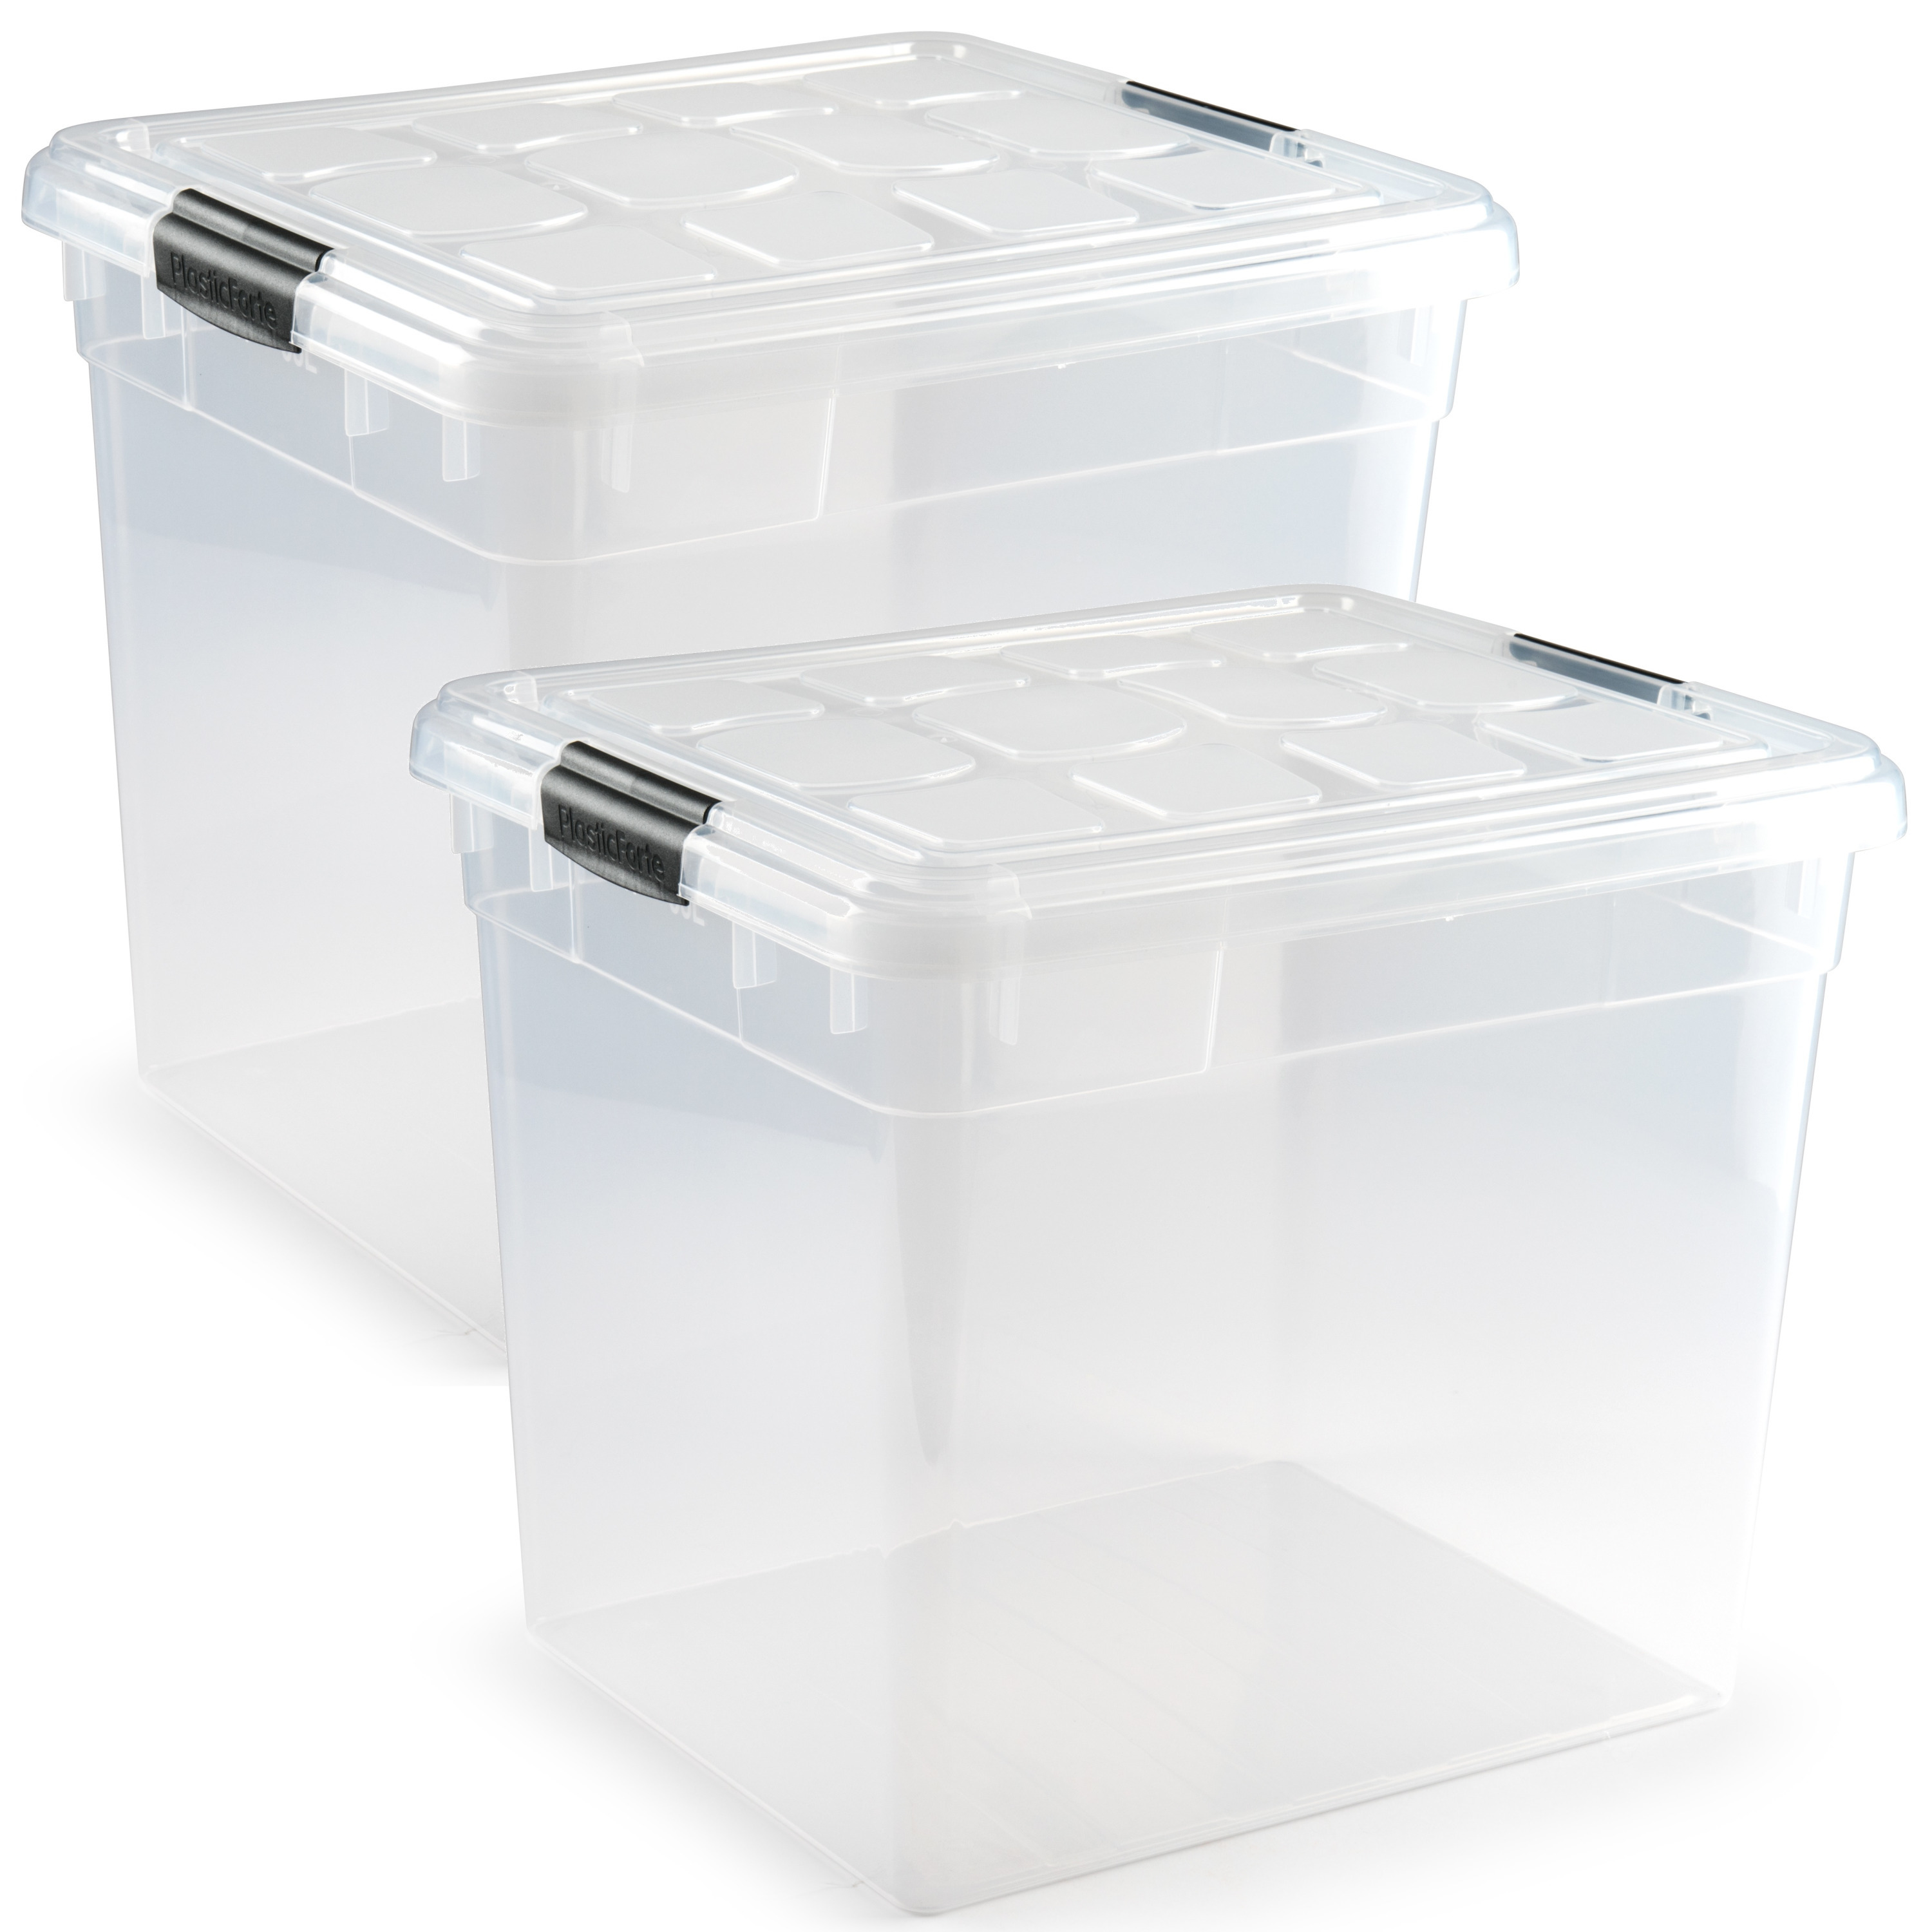 5x Opslagbakken-organizers met deksel 35 liter transparant